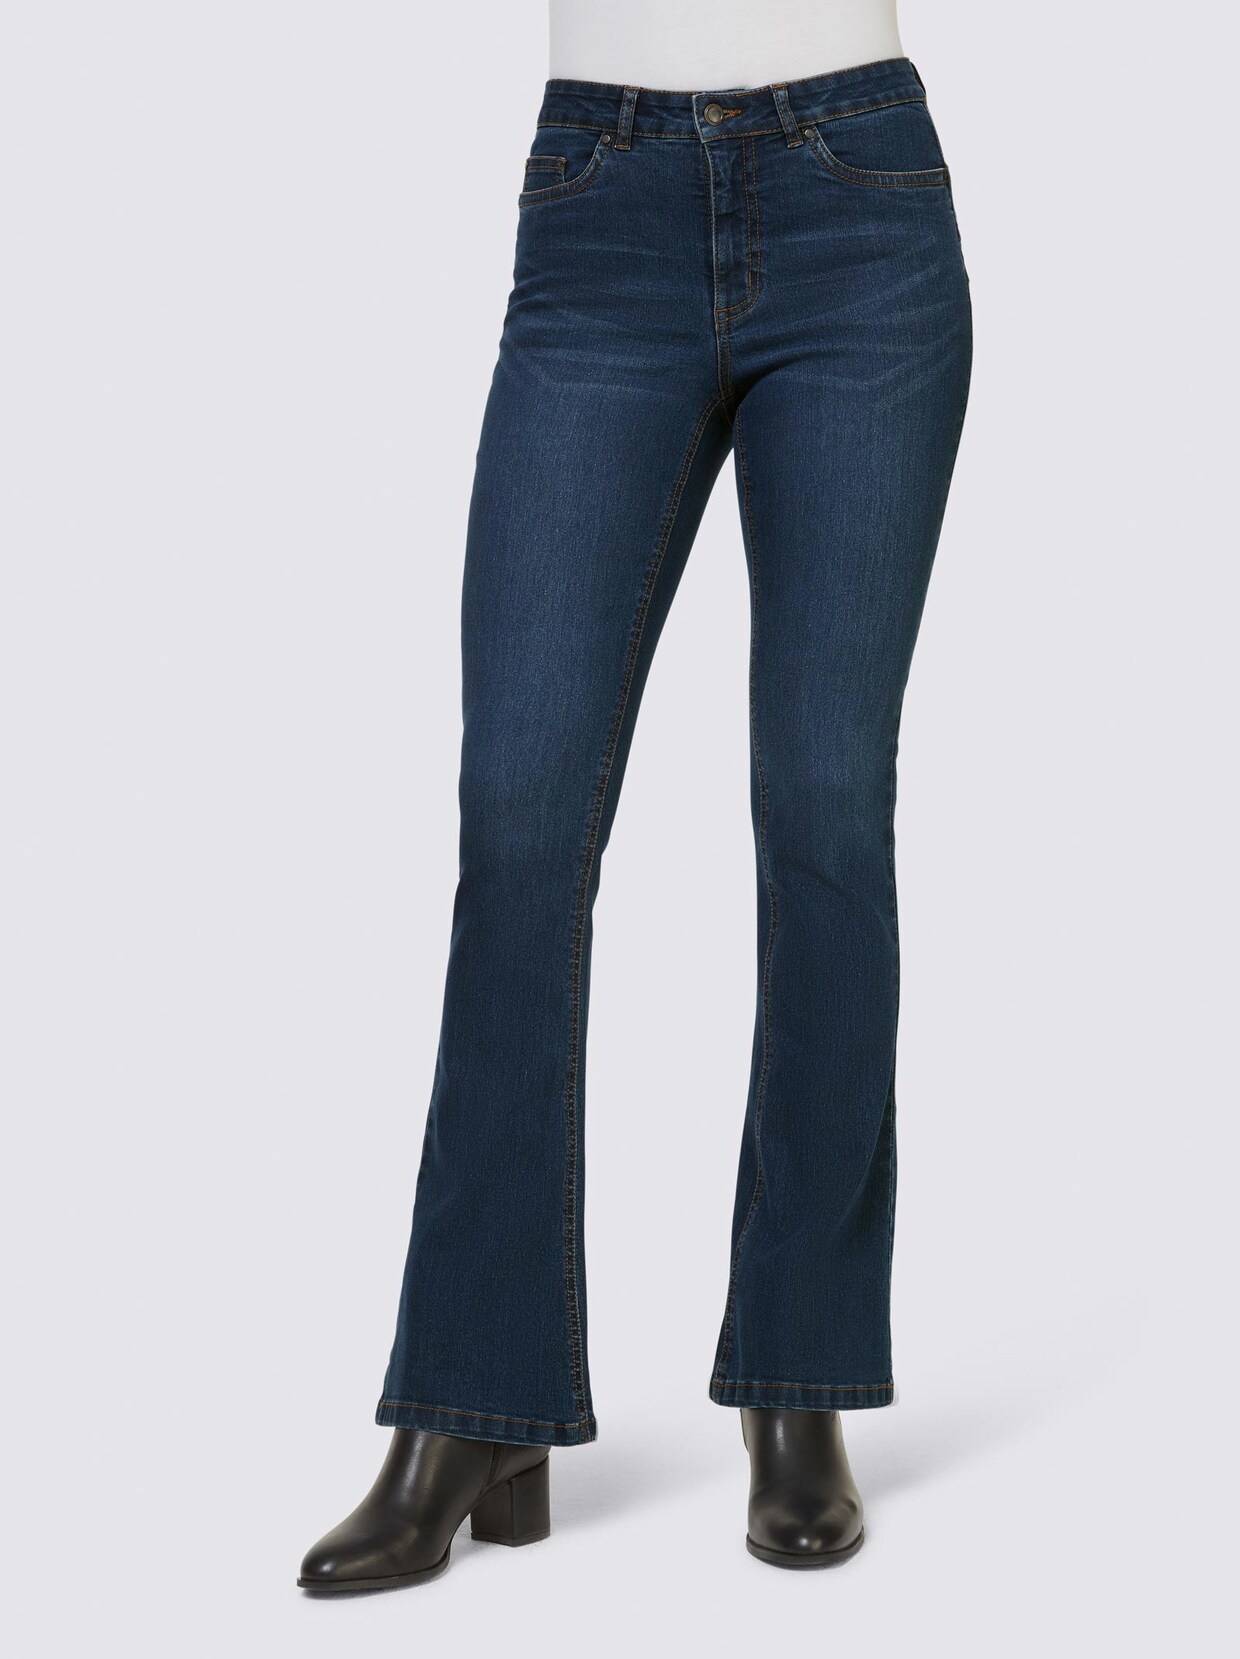 Linea Tesini jeans - blue-stonewashed